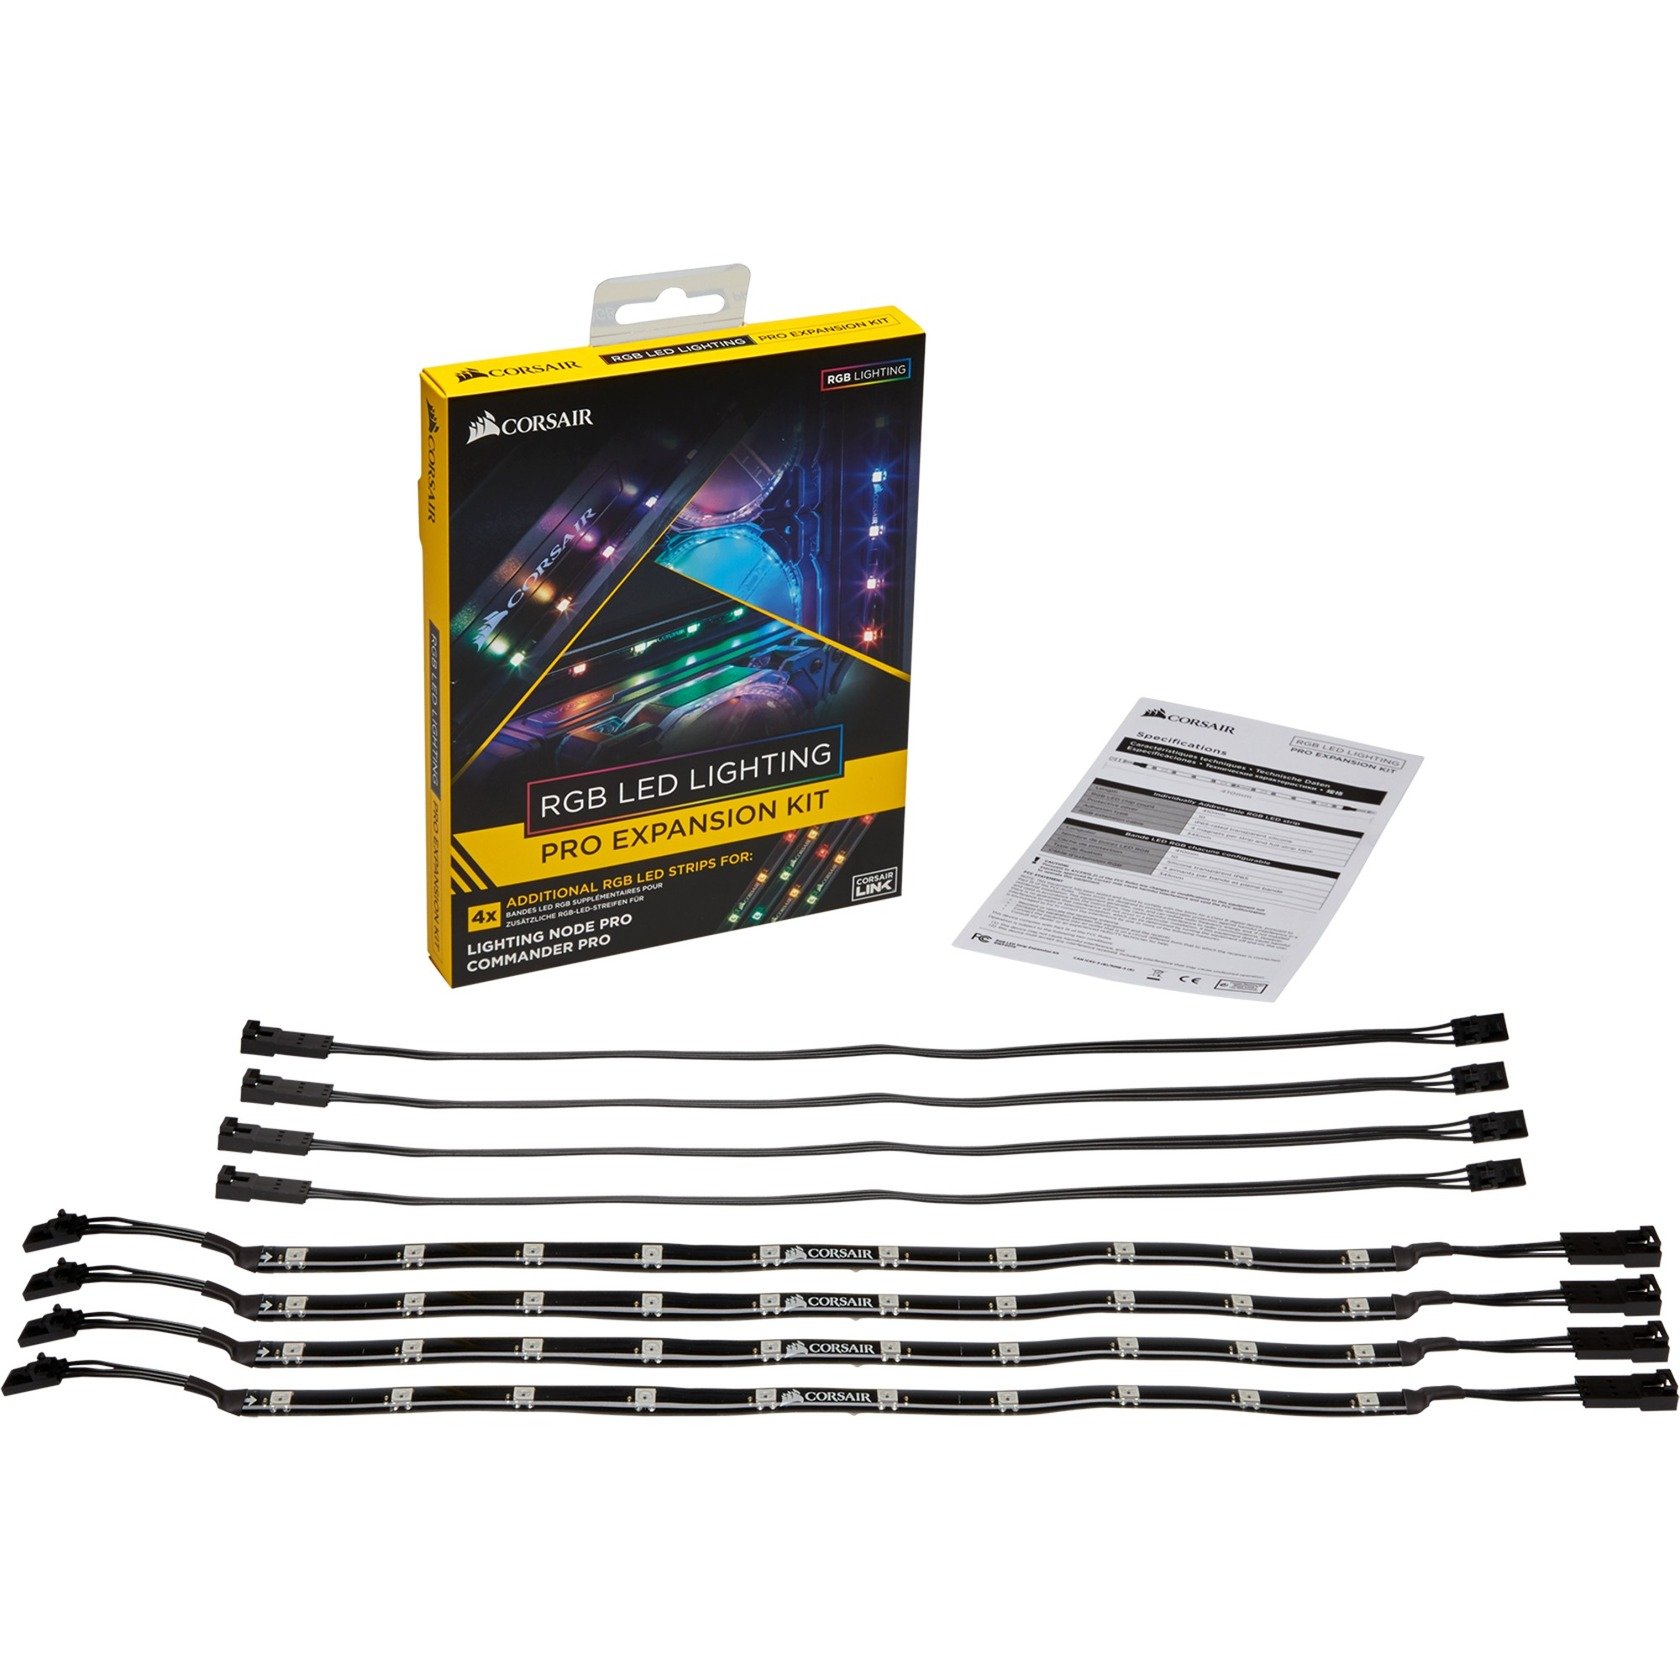 Image of Alternate - RGB LED Lighting PRO Expansion Kit, LED-Streifen online einkaufen bei Alternate